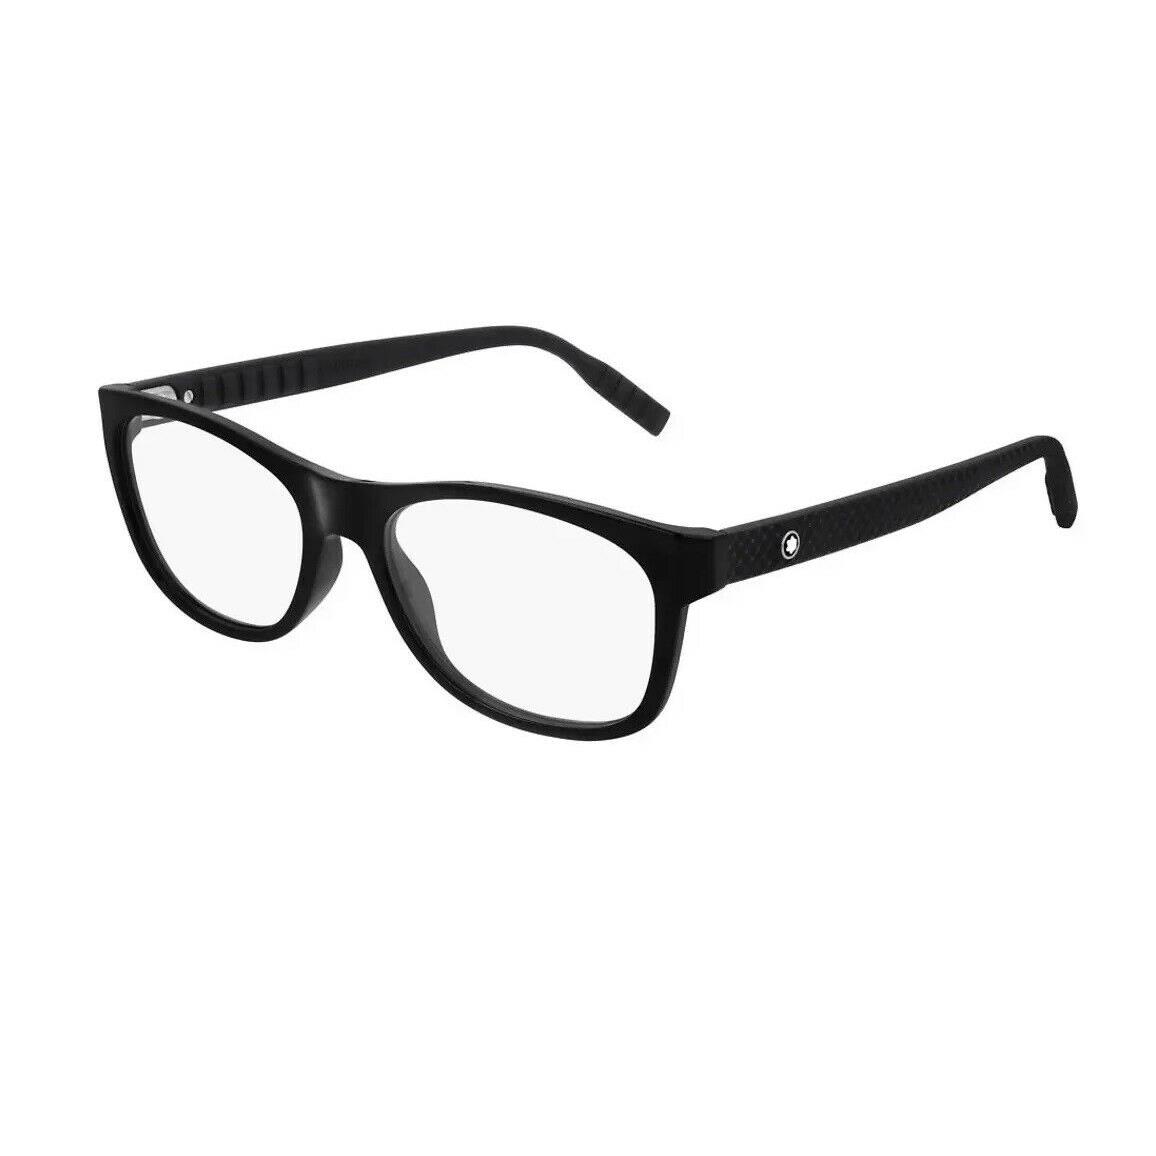 Montblanc Mont Blanc Men Eyeglasses MB0065o-002 Black Frame Clear Lenses